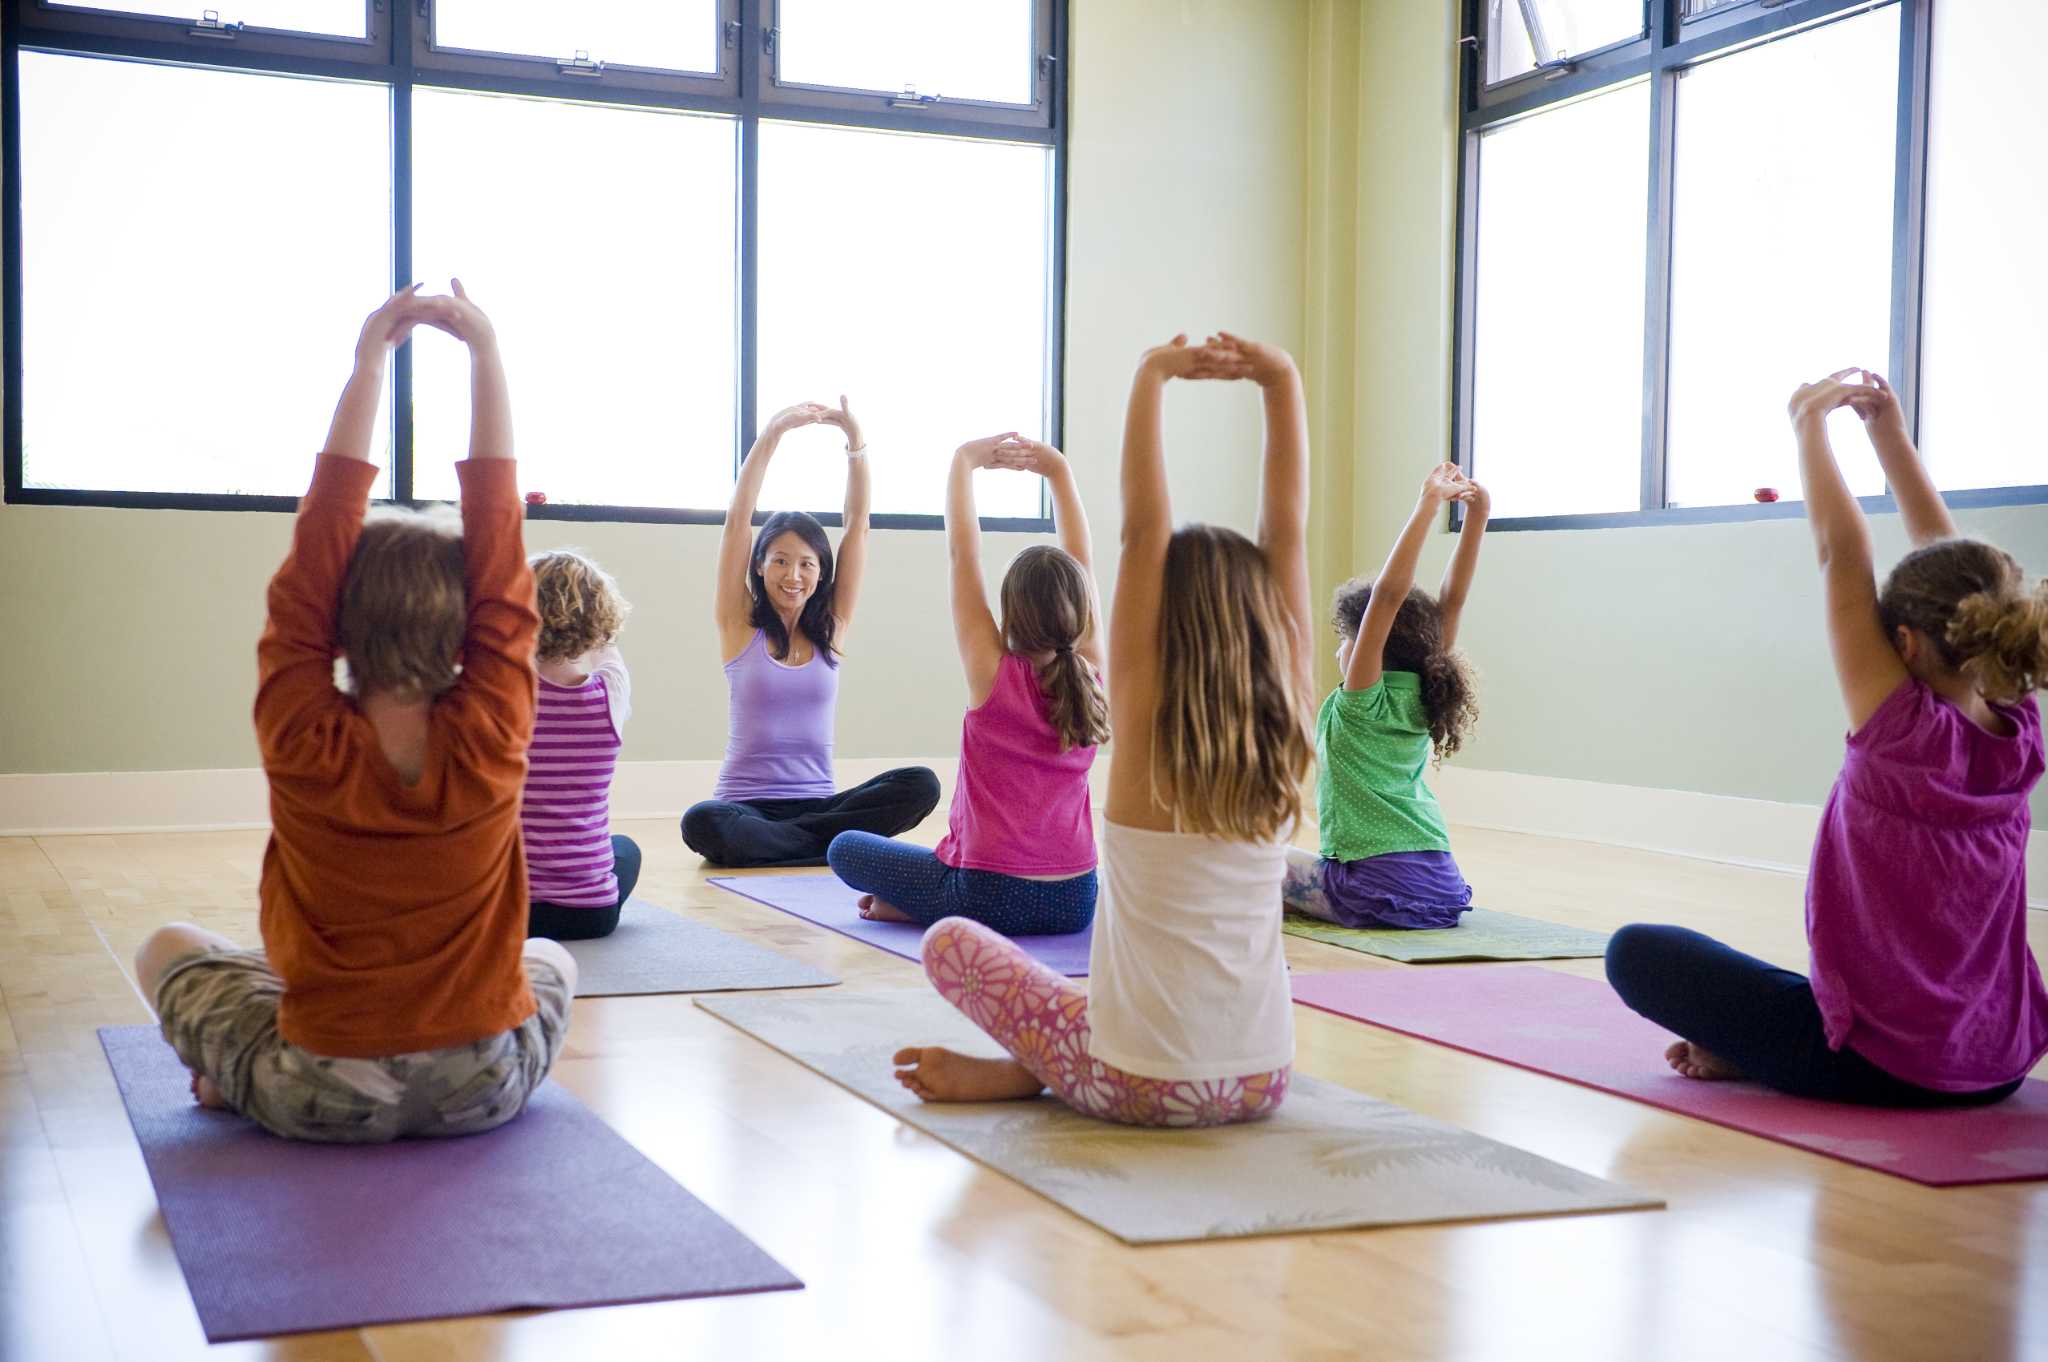 Yoga studio starting children's camp next week